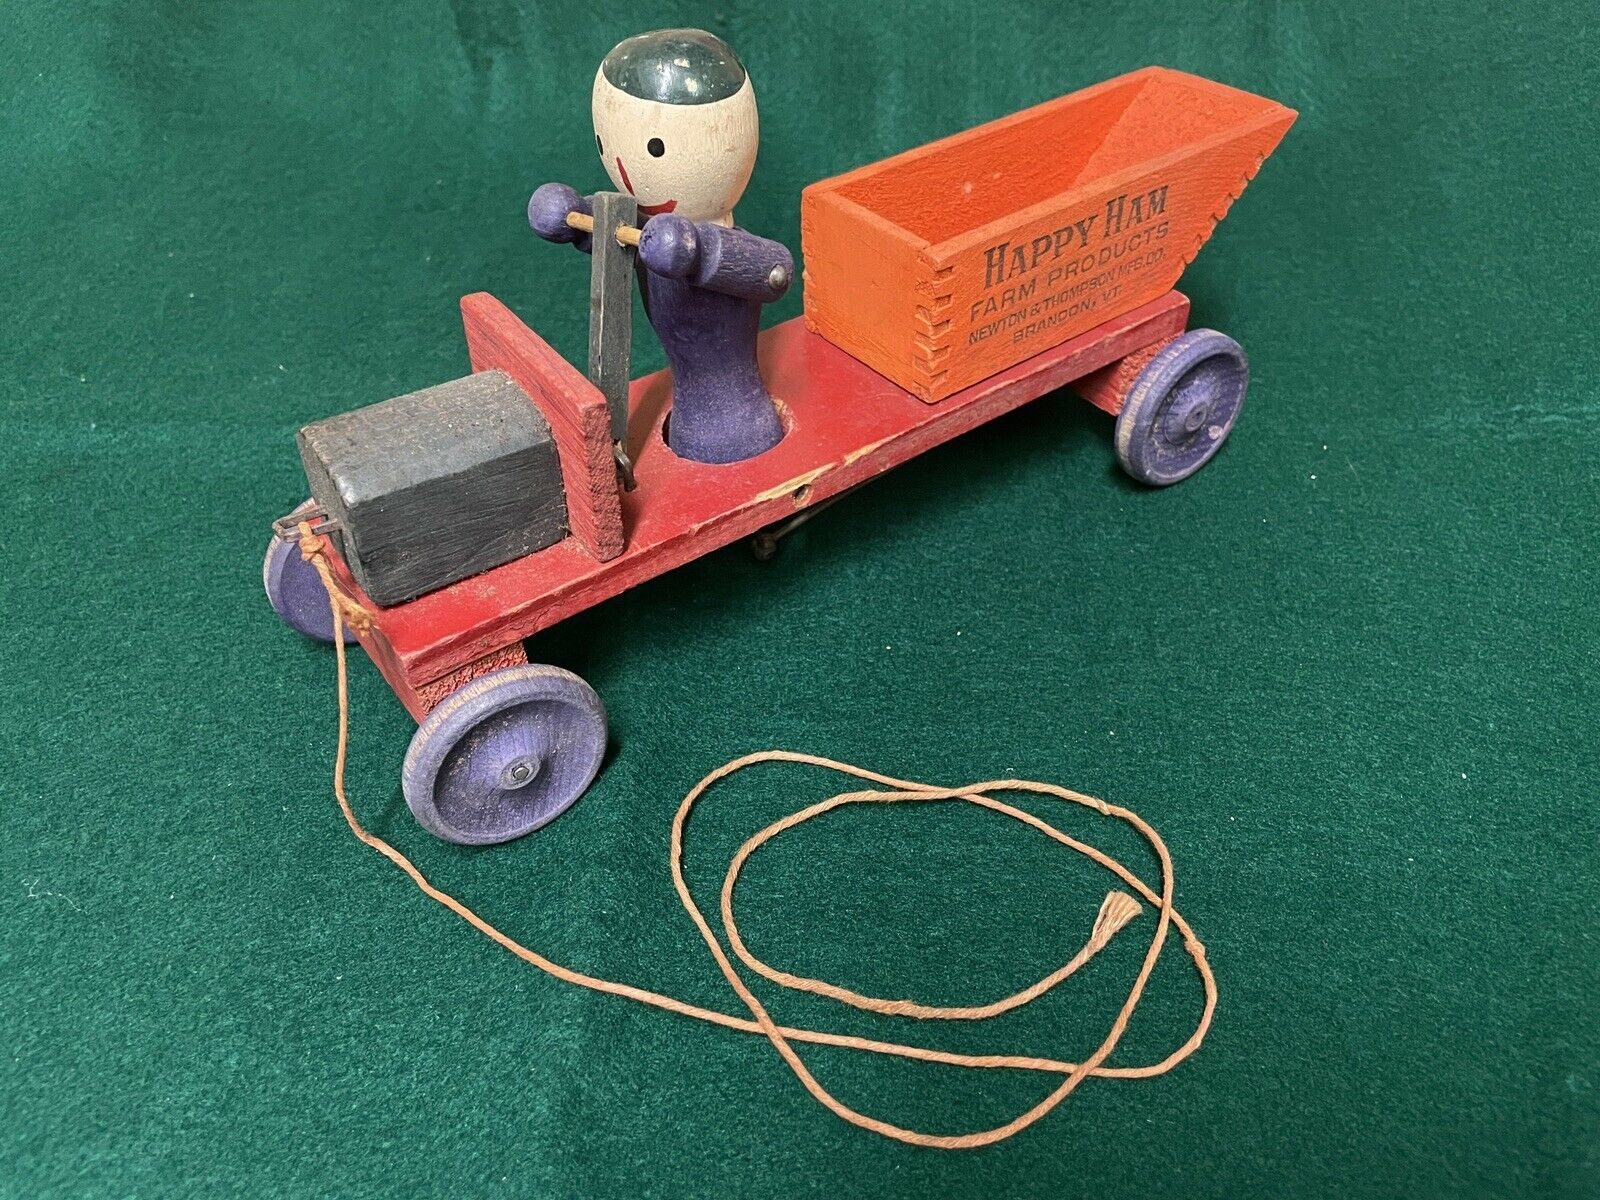 Antique Happy Ham Farm Products Pull Toy Truck Circa 1930’s-40’s, Brandon, Vt.